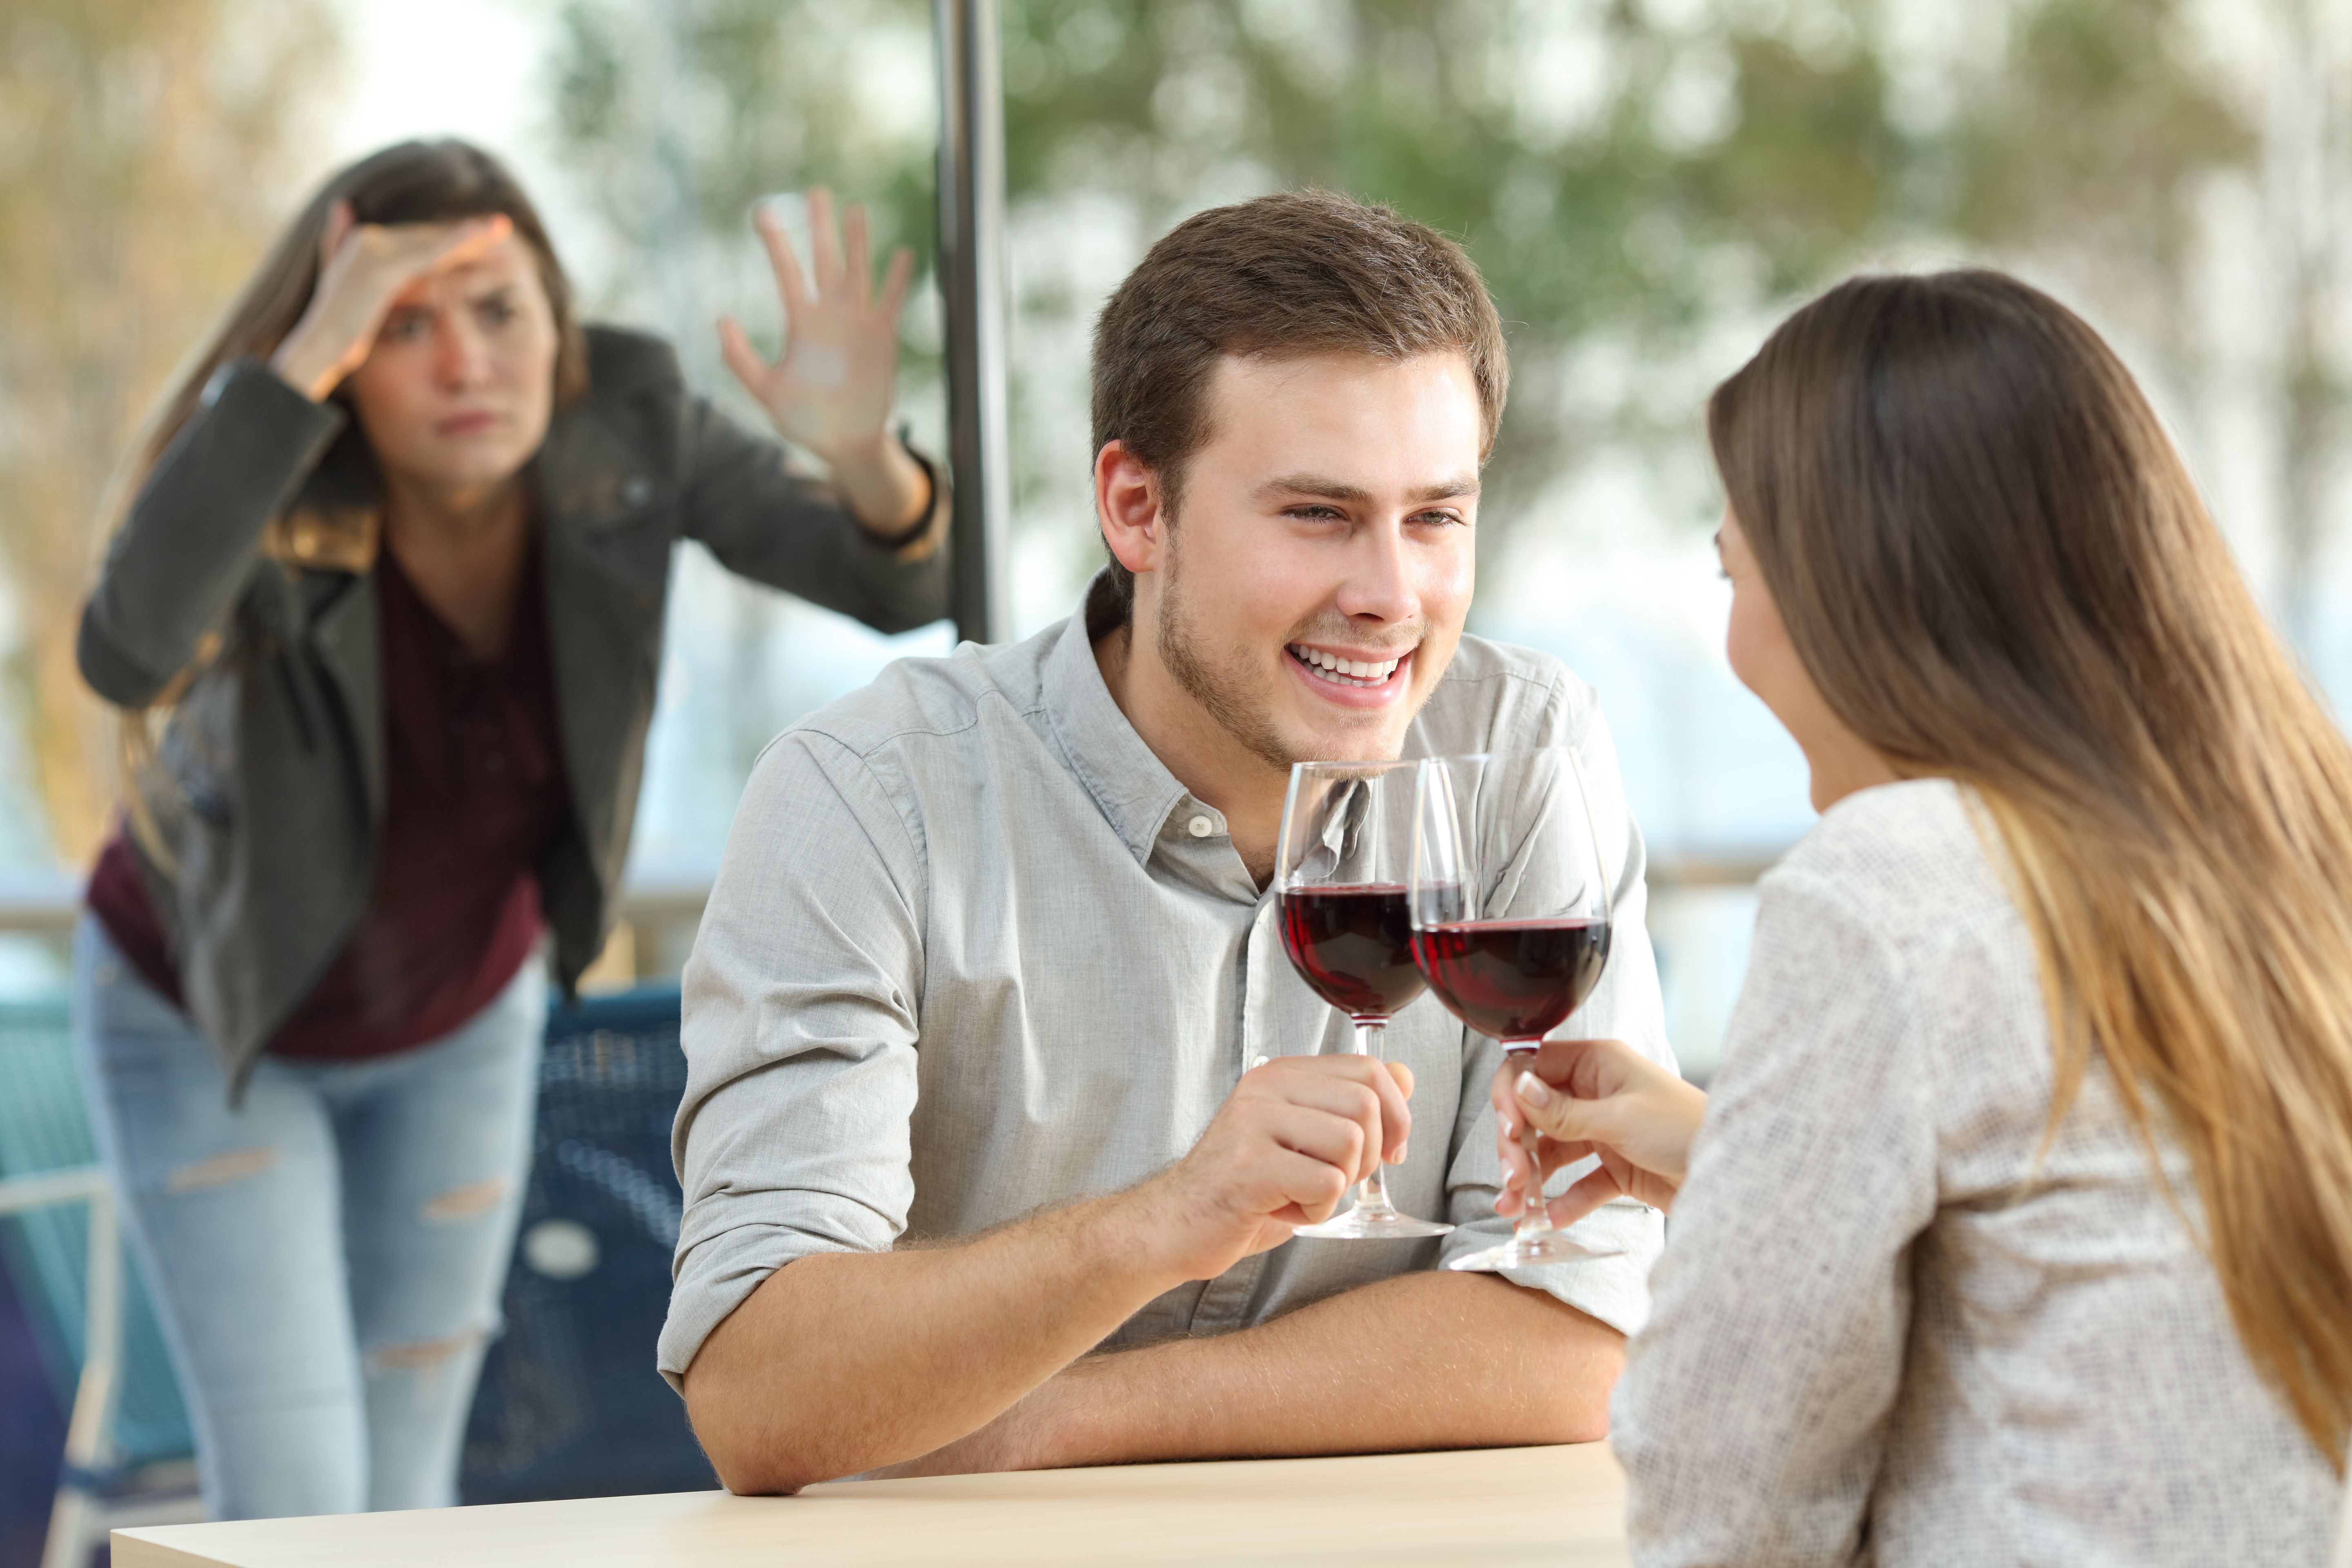 A woman found her partner cheating inside a restaurant. | Photo: Shutterstock